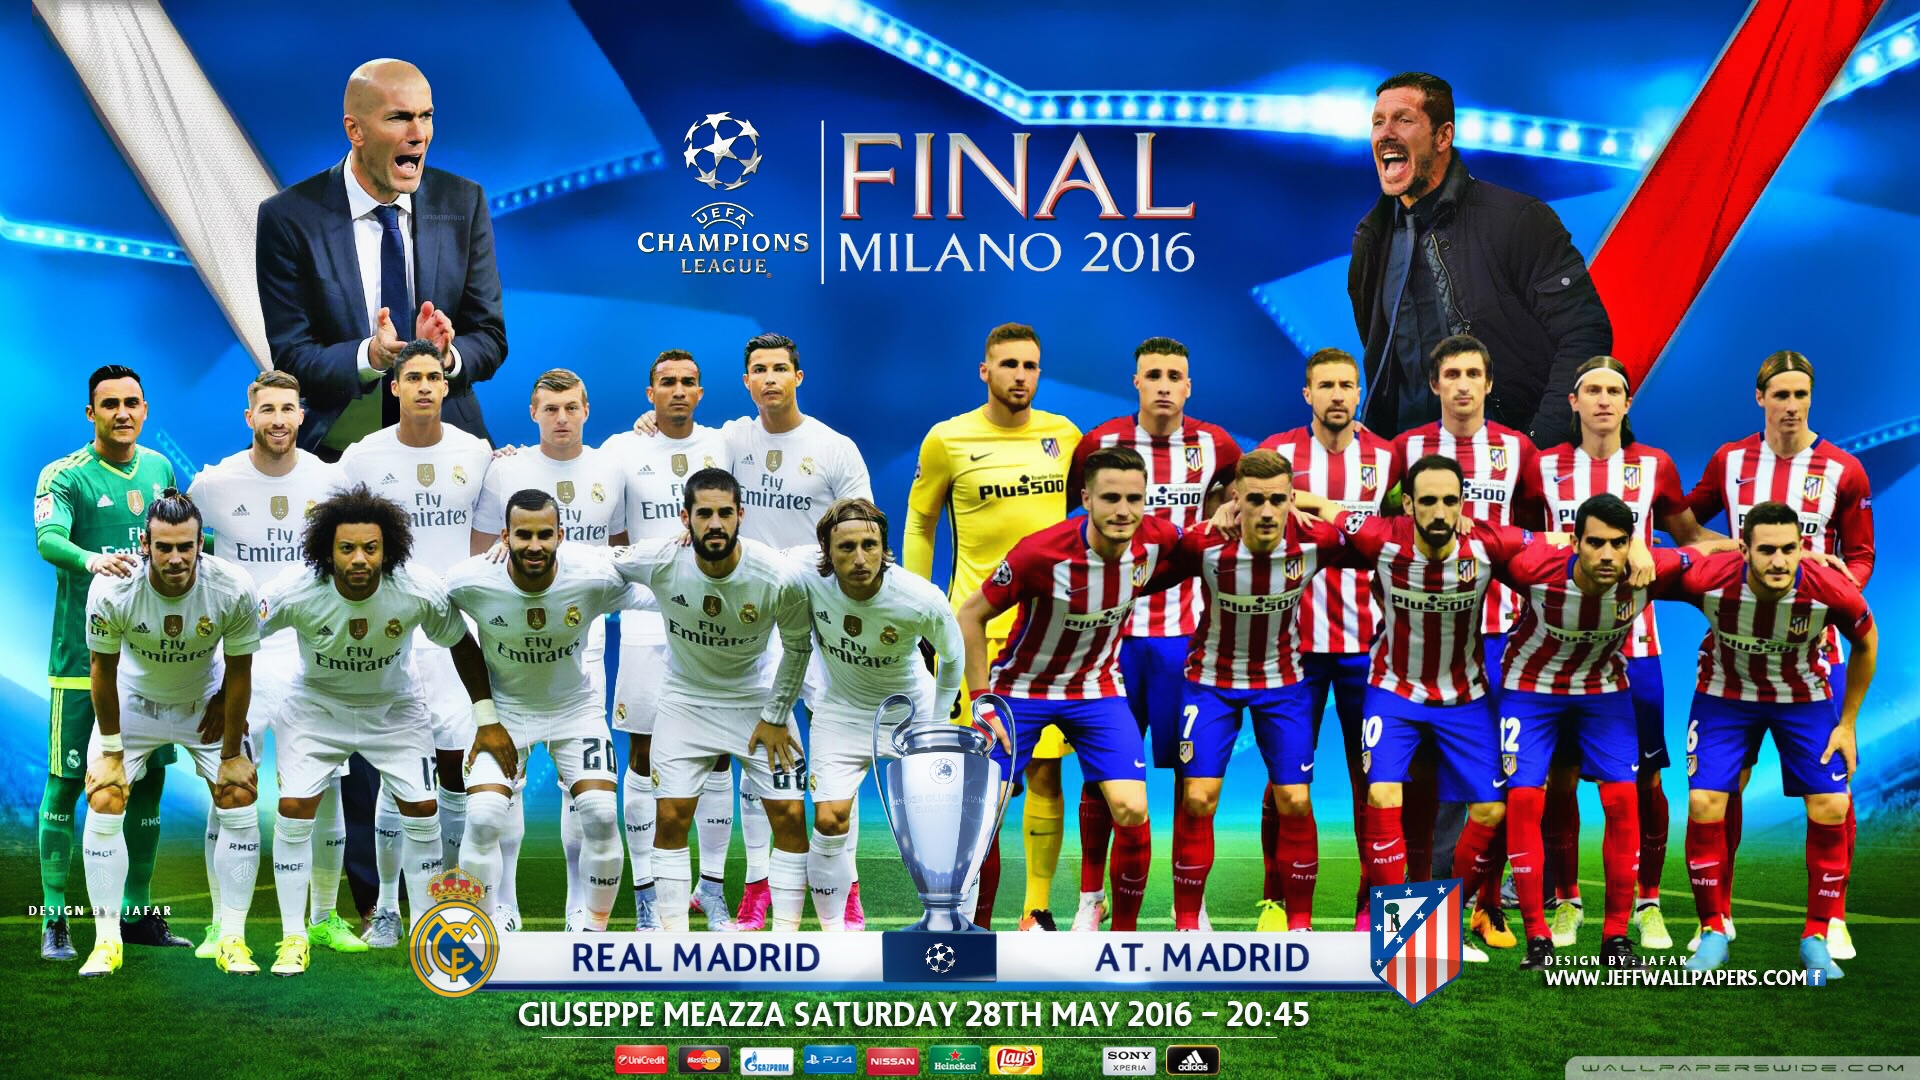 Uefa Champions League Wallpaper Hd Wallpapers Gifs - Real Madrid Vs Atletico De Madrid Final 2016 - HD Wallpaper 